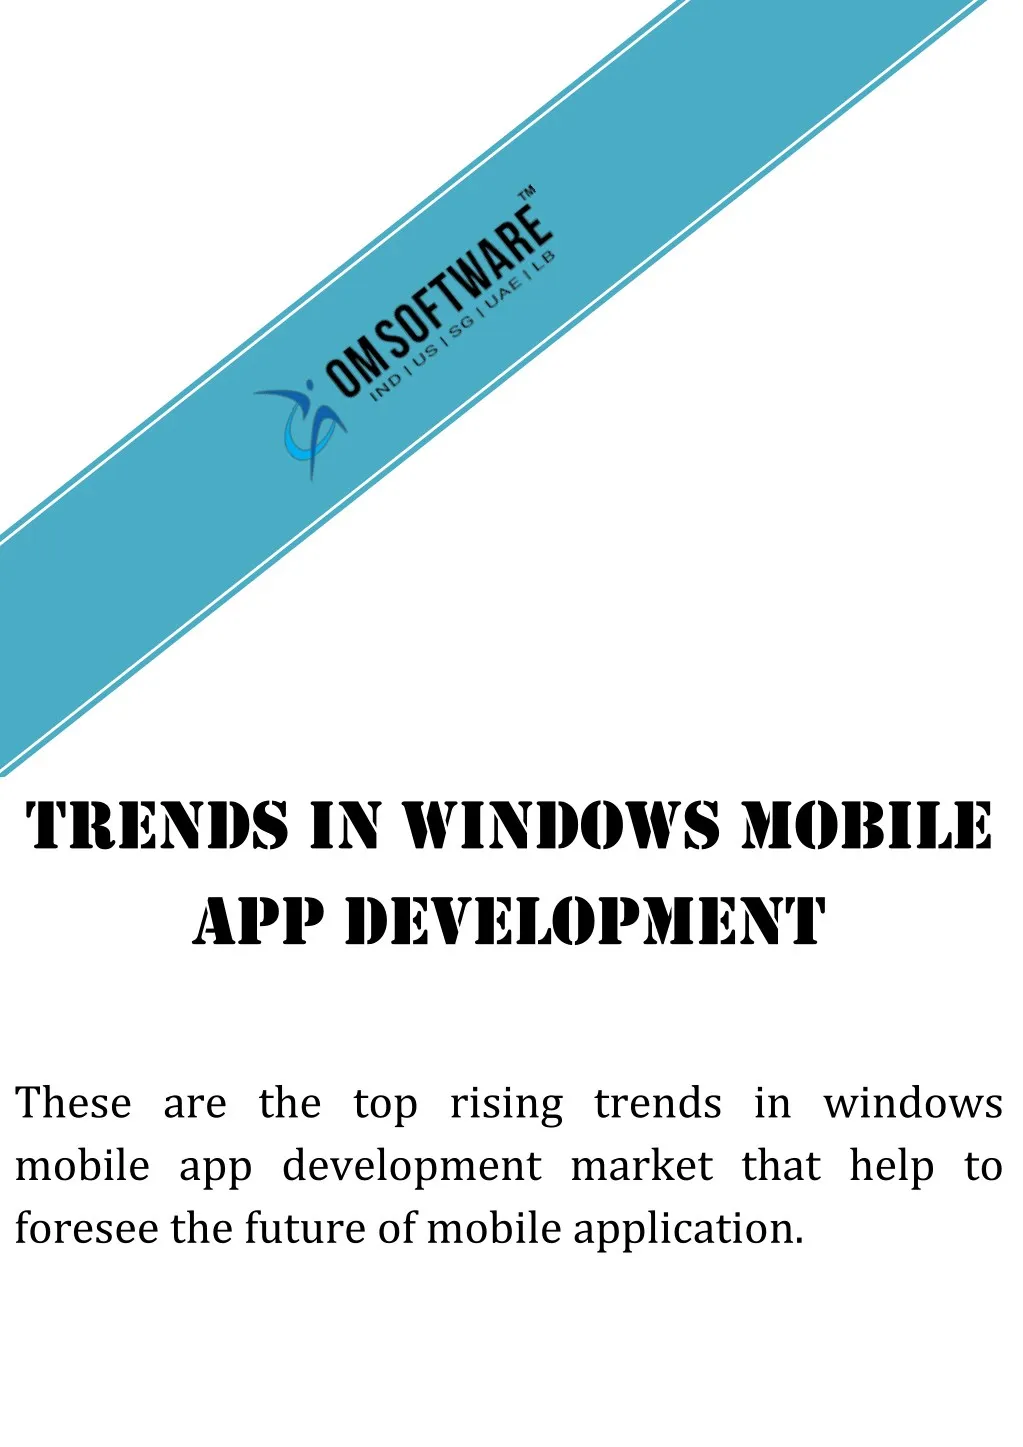 trends in windows mobile app development